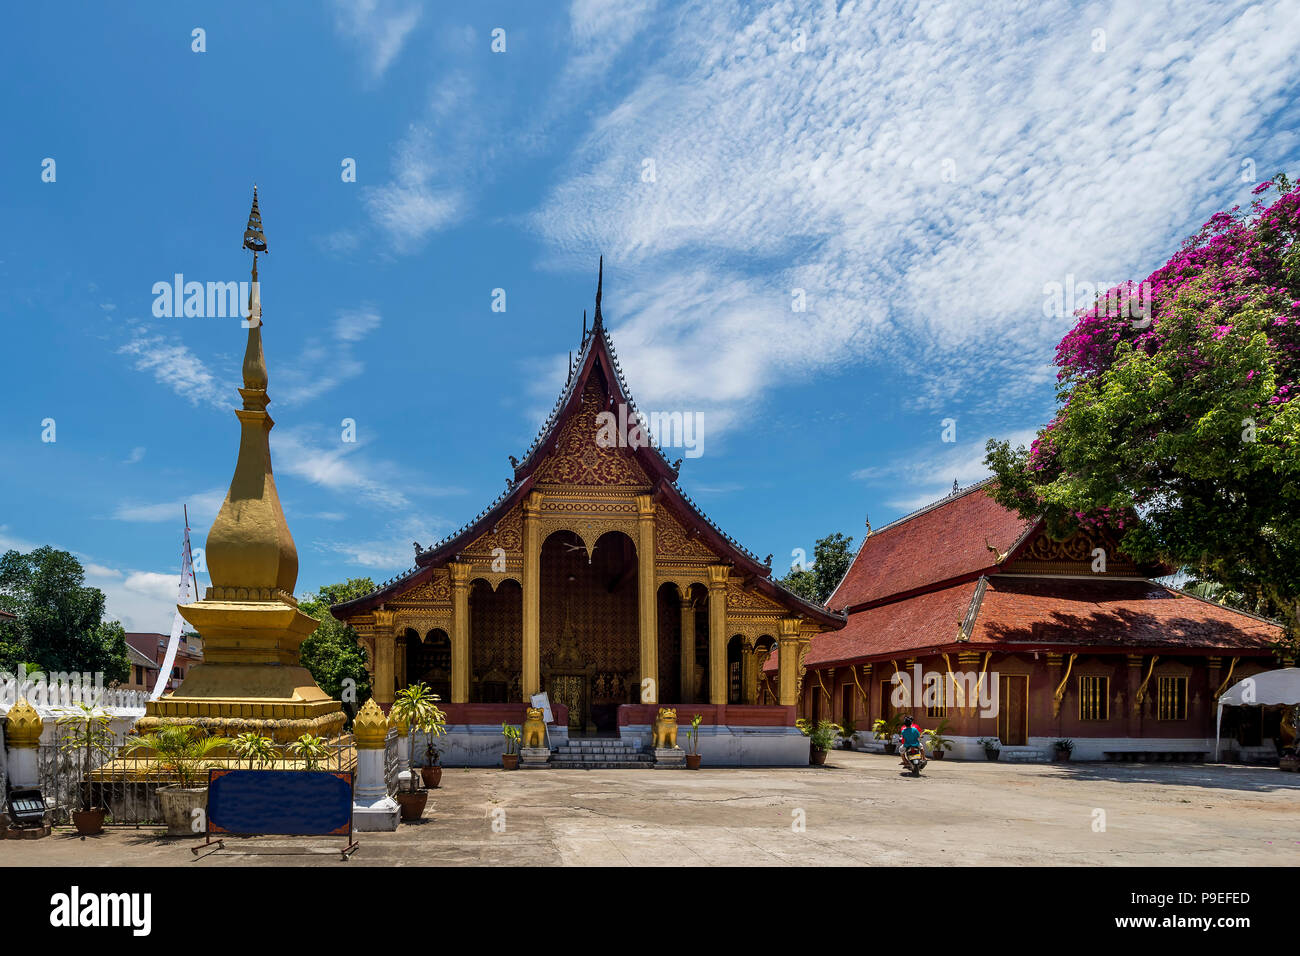 Beautiful view of the famous Wat Sensoukharam temple in Luang Prabang ...